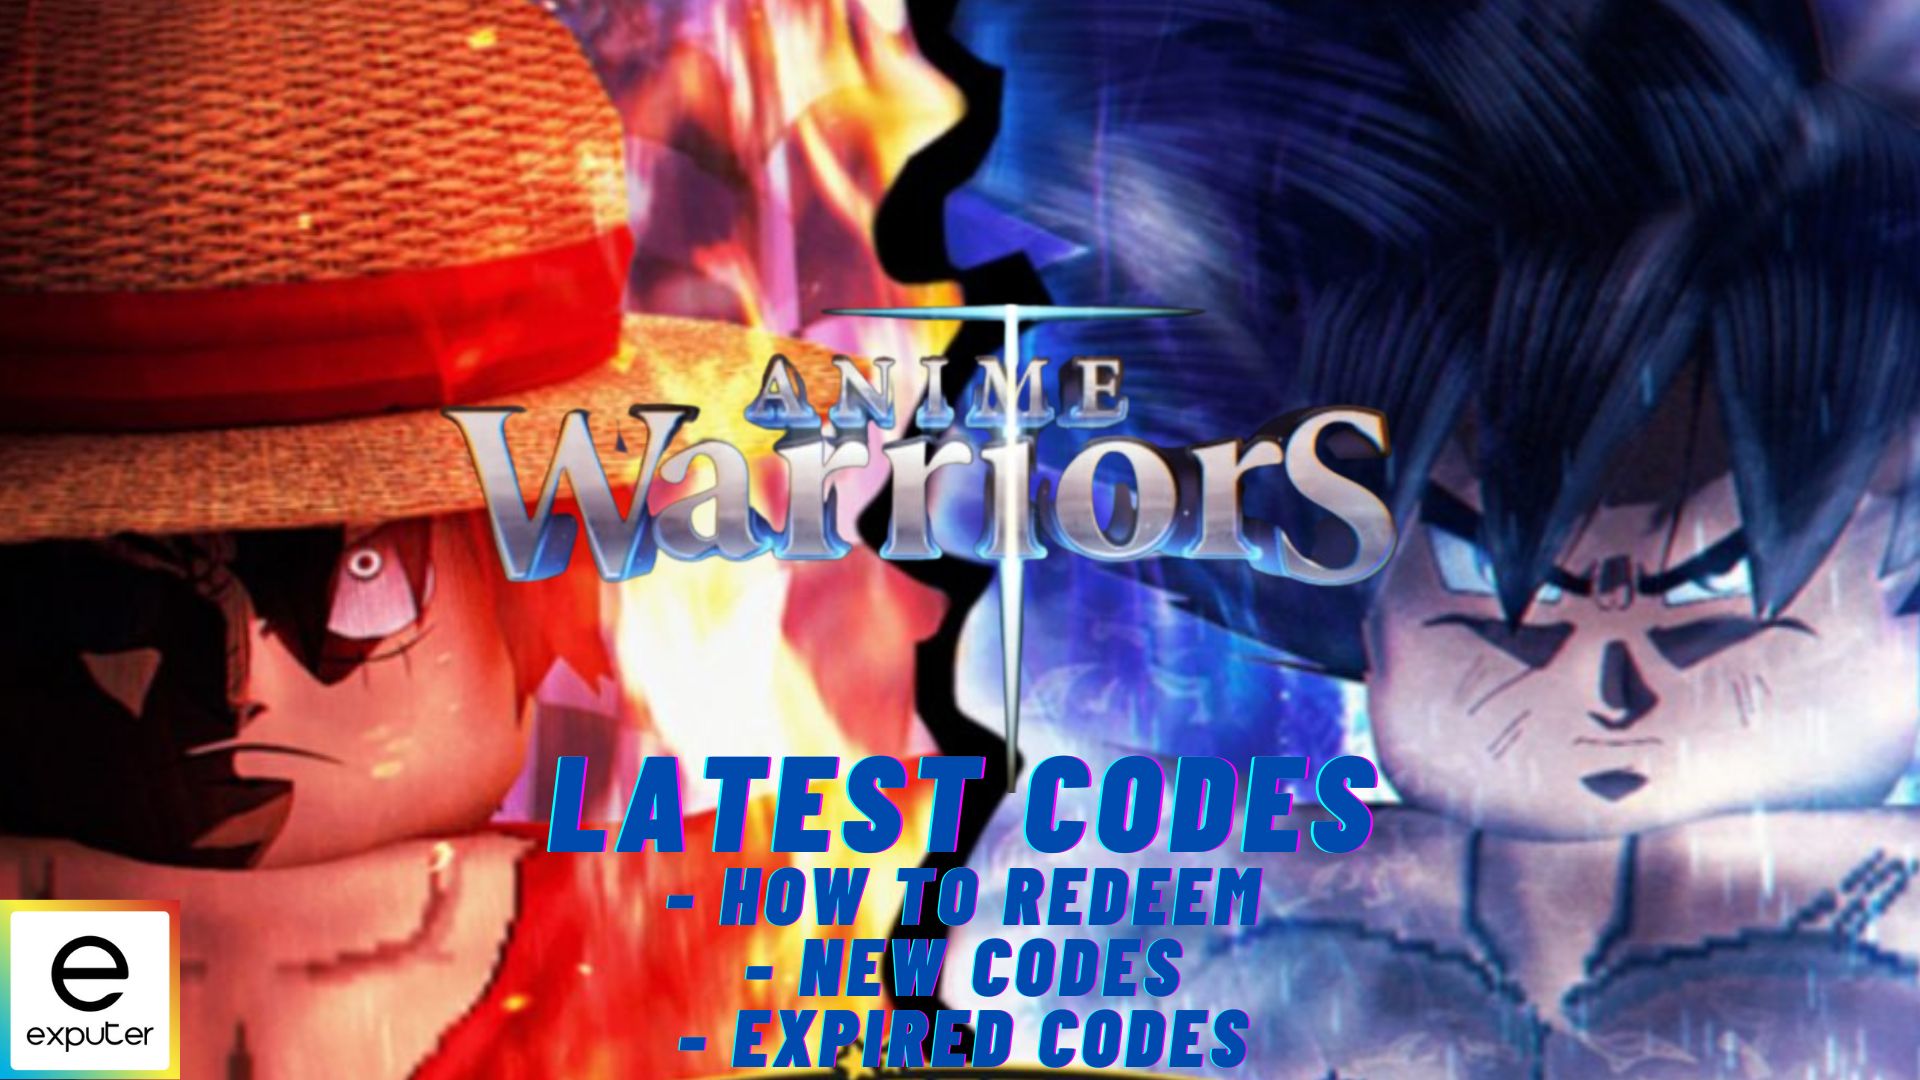 Anime Warriors Codes [December 2023] 